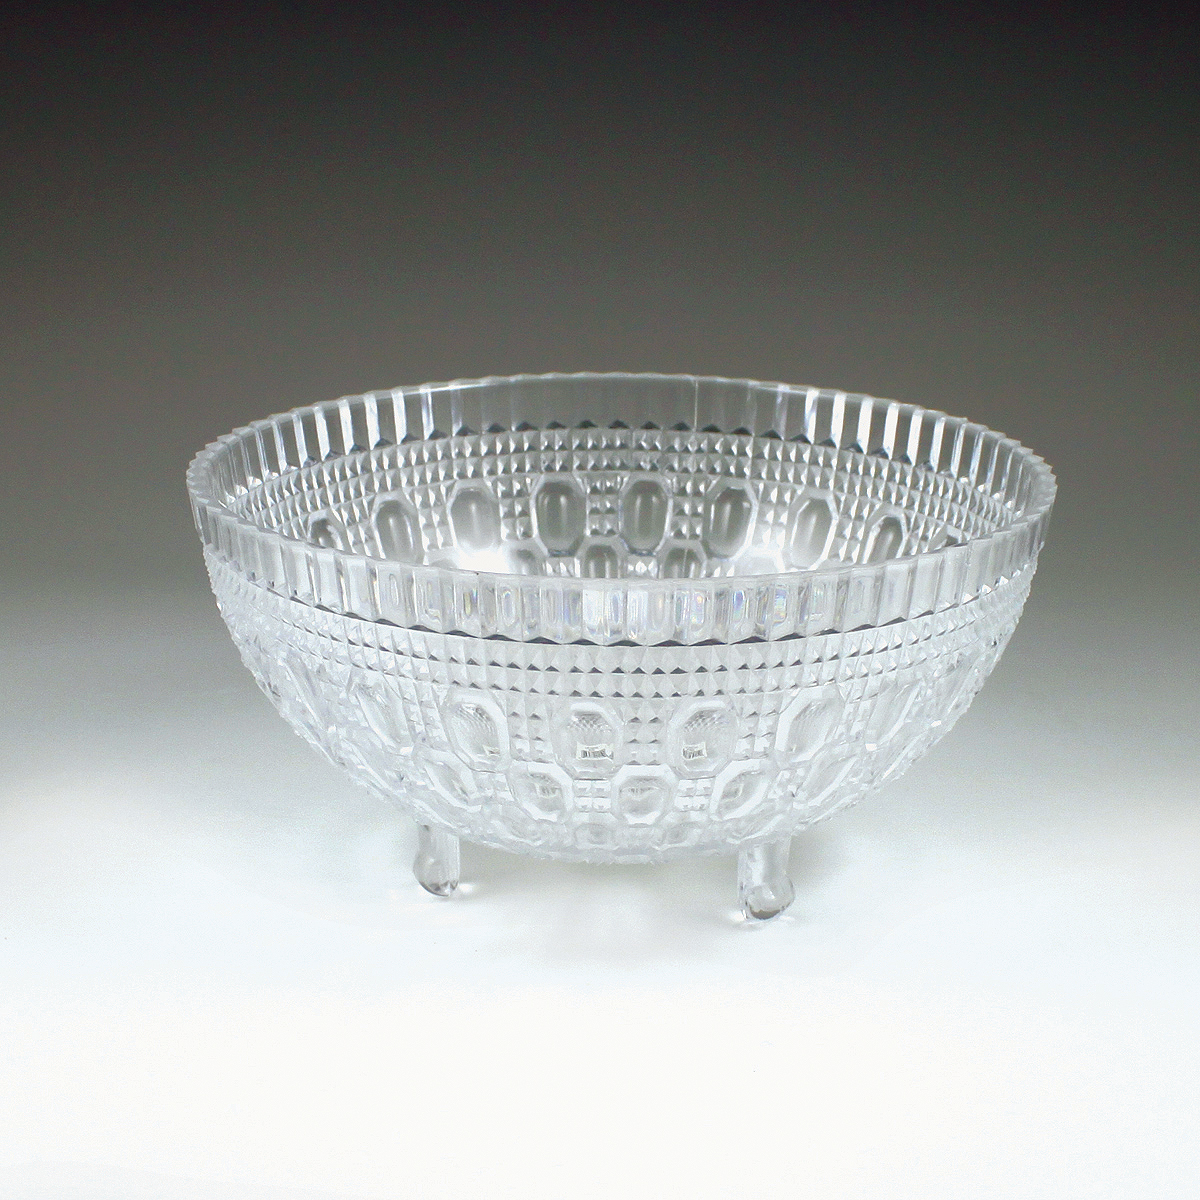 Disposable Plastic Bowls Party Serving Silver Rim Salad Bowl Crystal Clear 4 Set